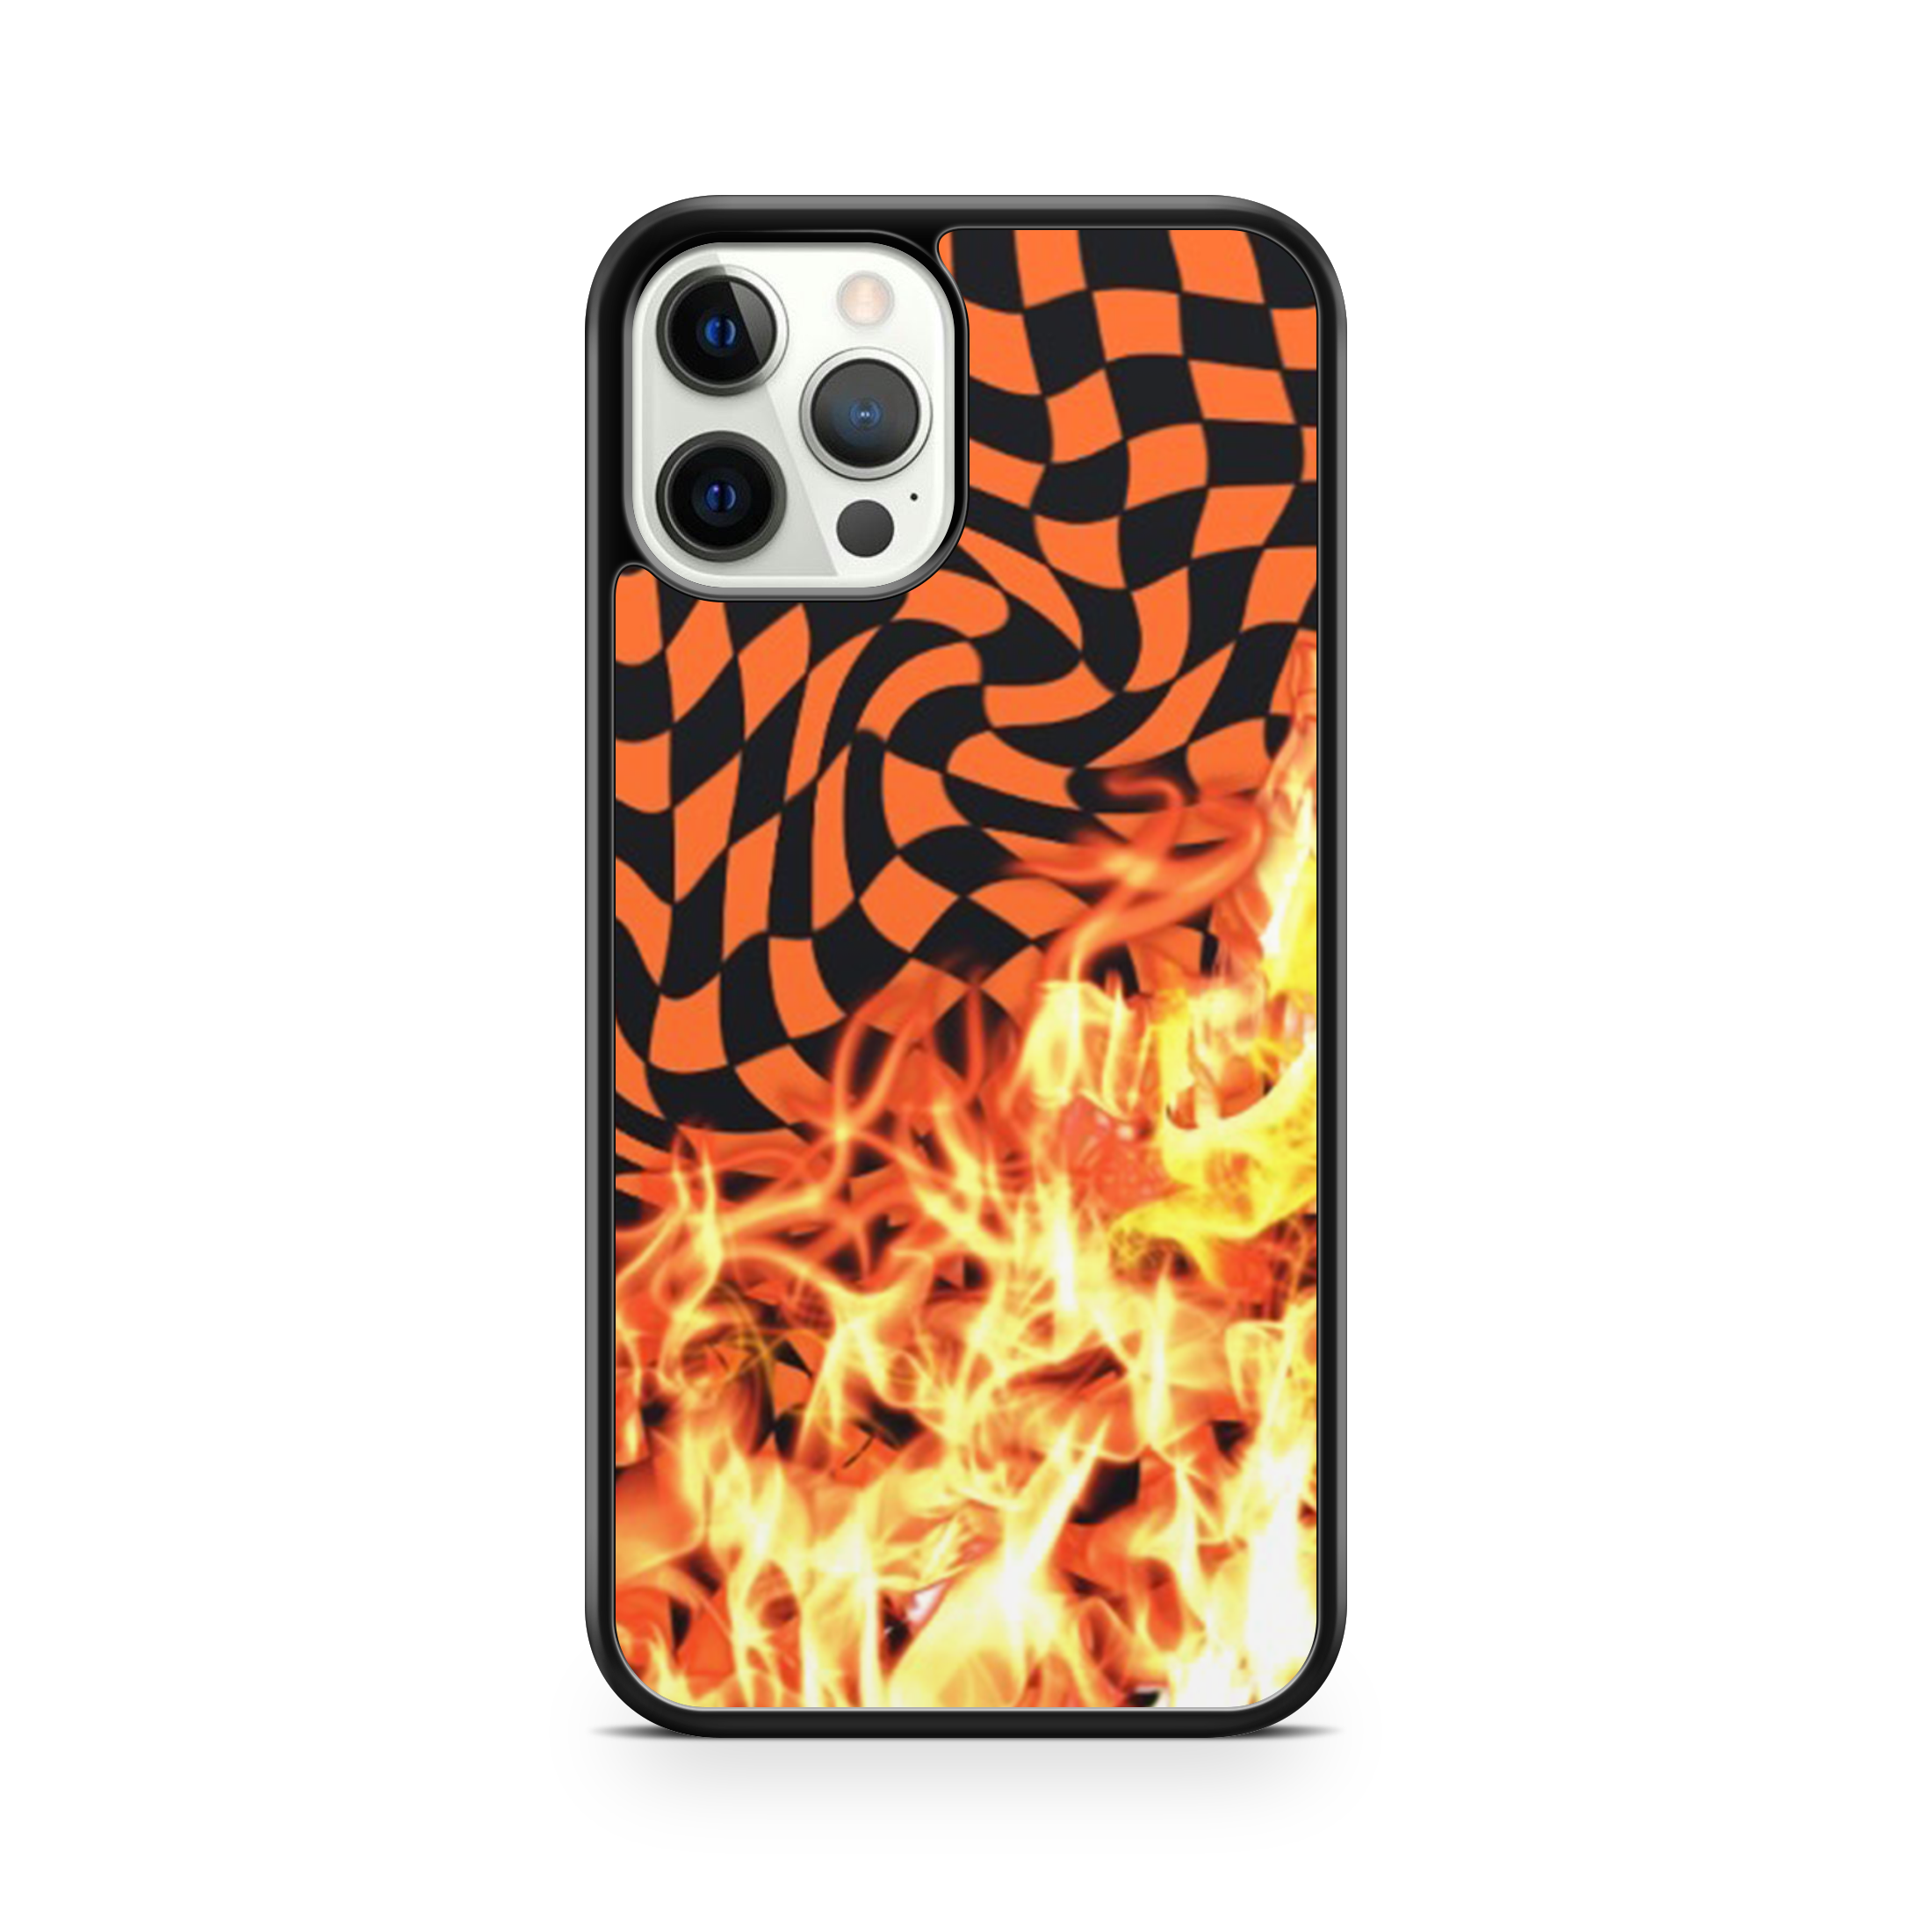 Orange brights checks and flames design iPhone case